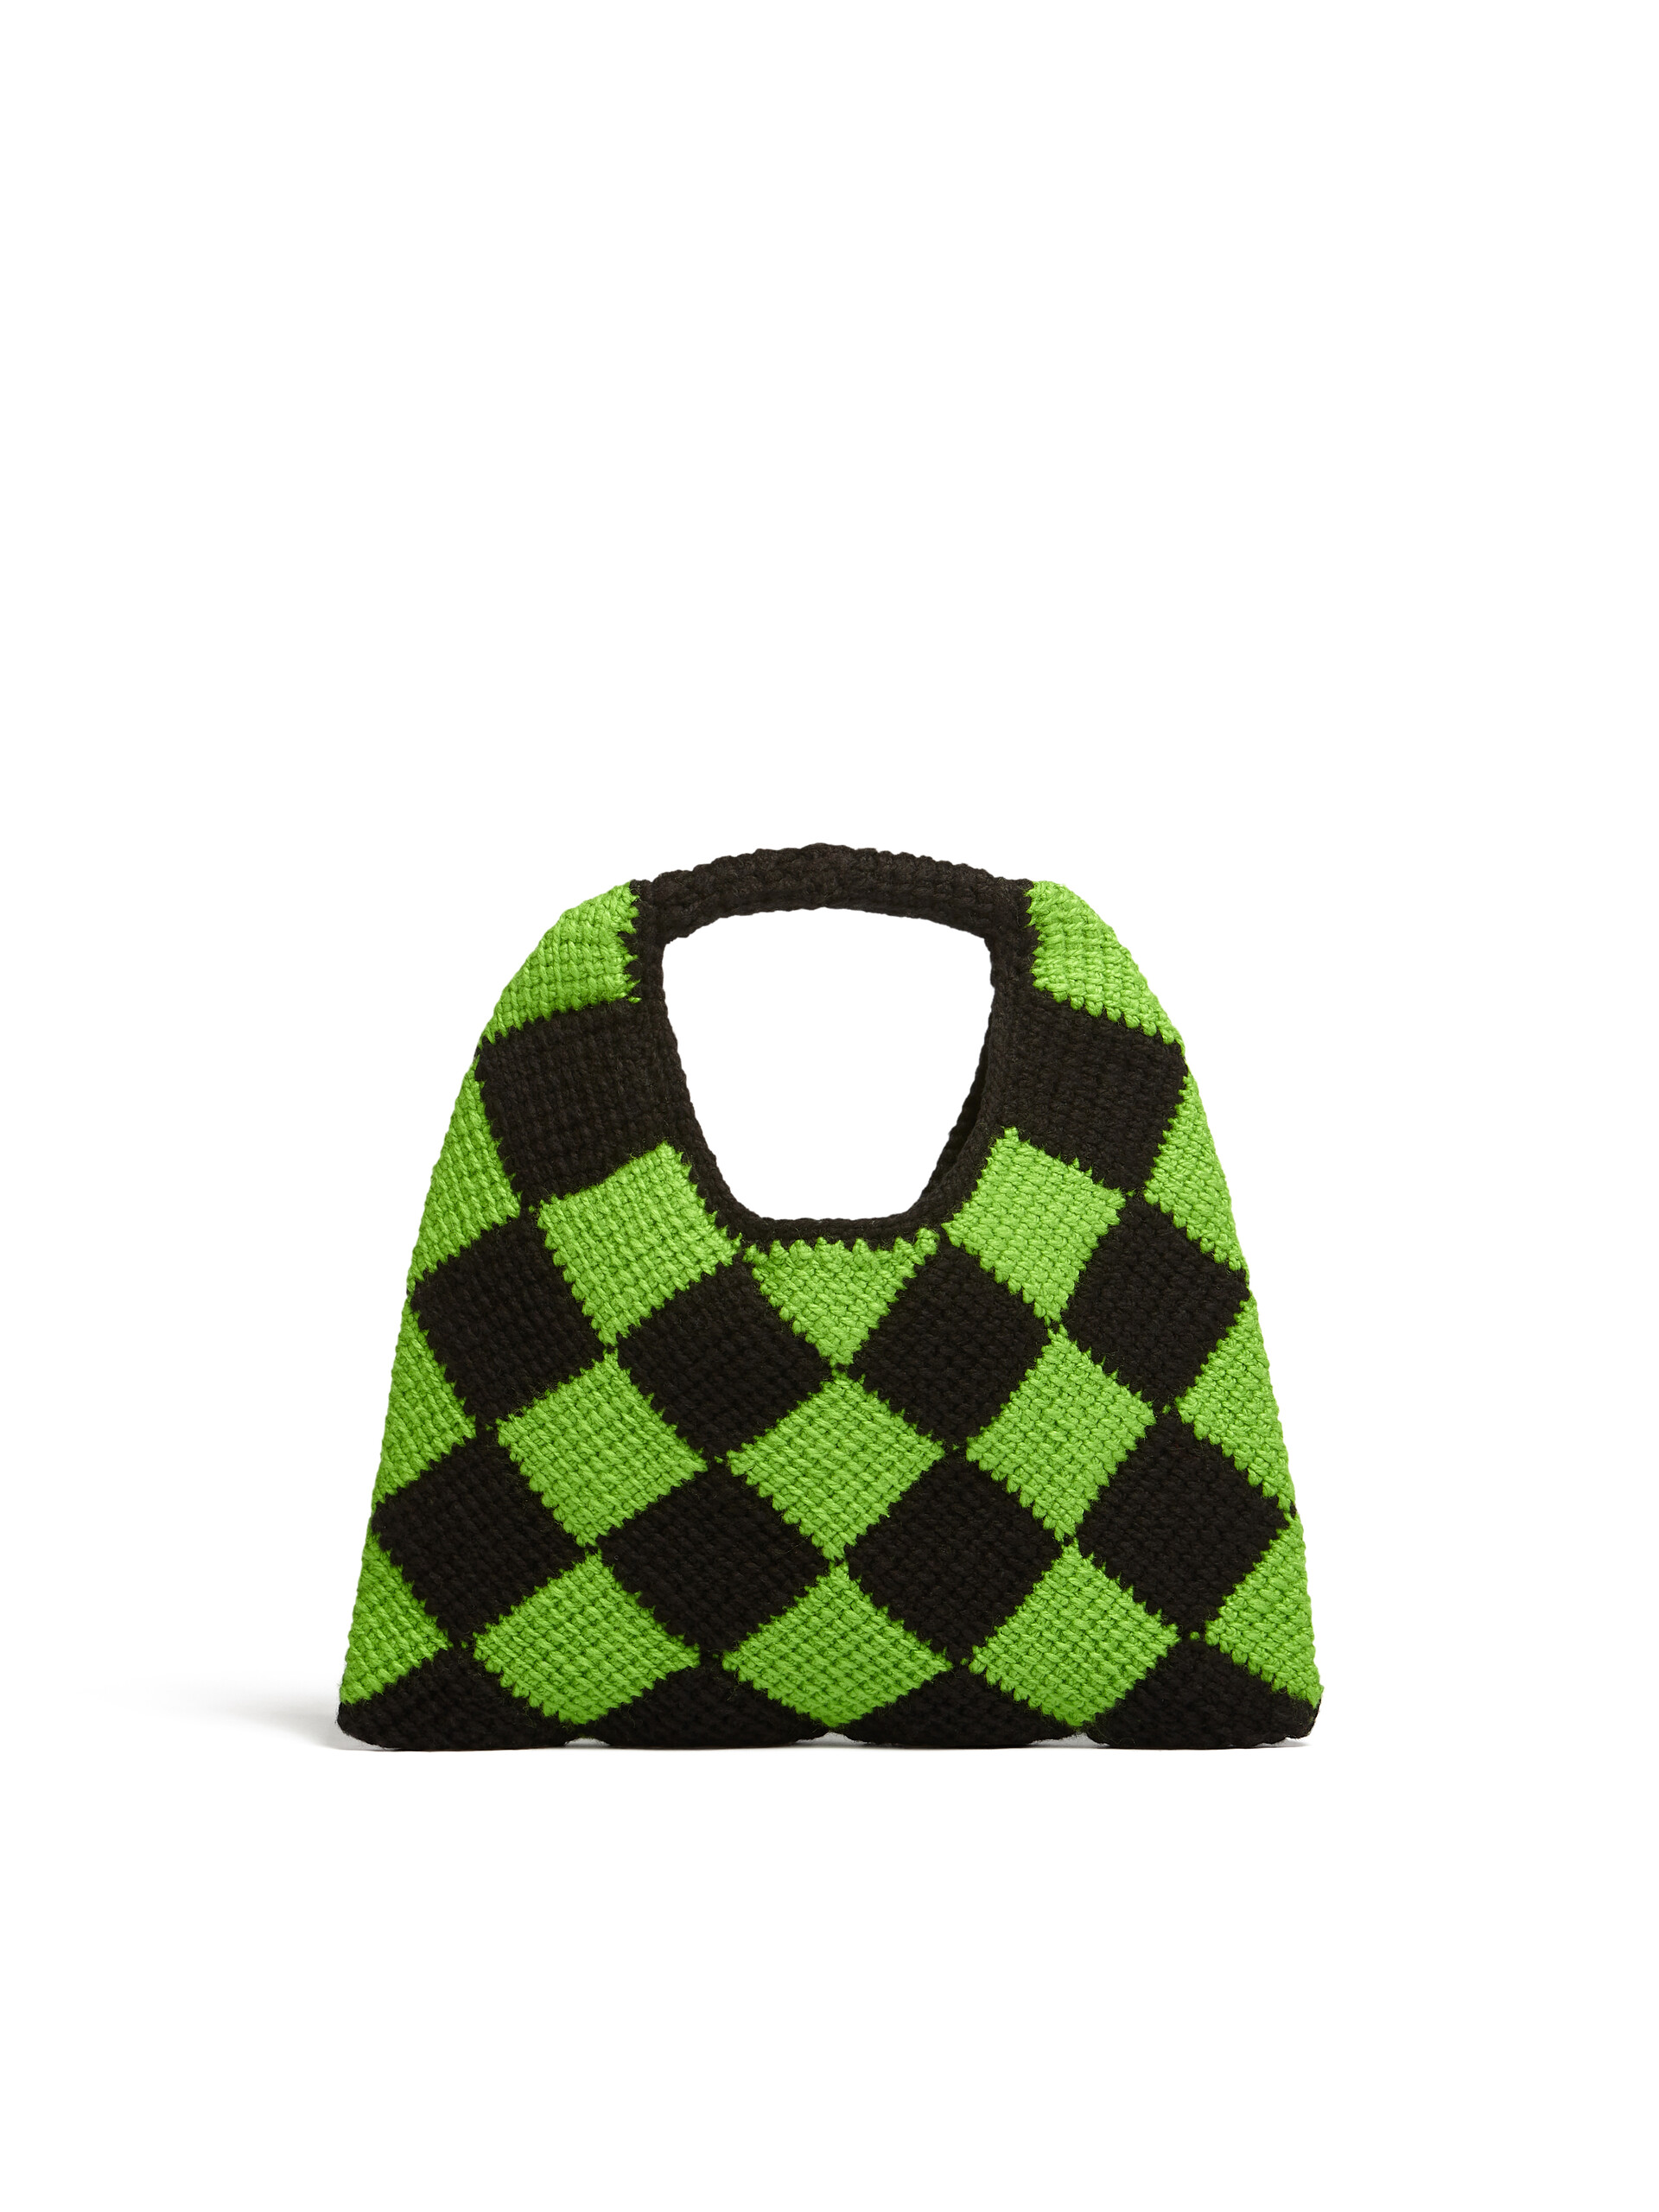 MARNI MARKET DIAMOND medium bag in green and black tech wool | Marni